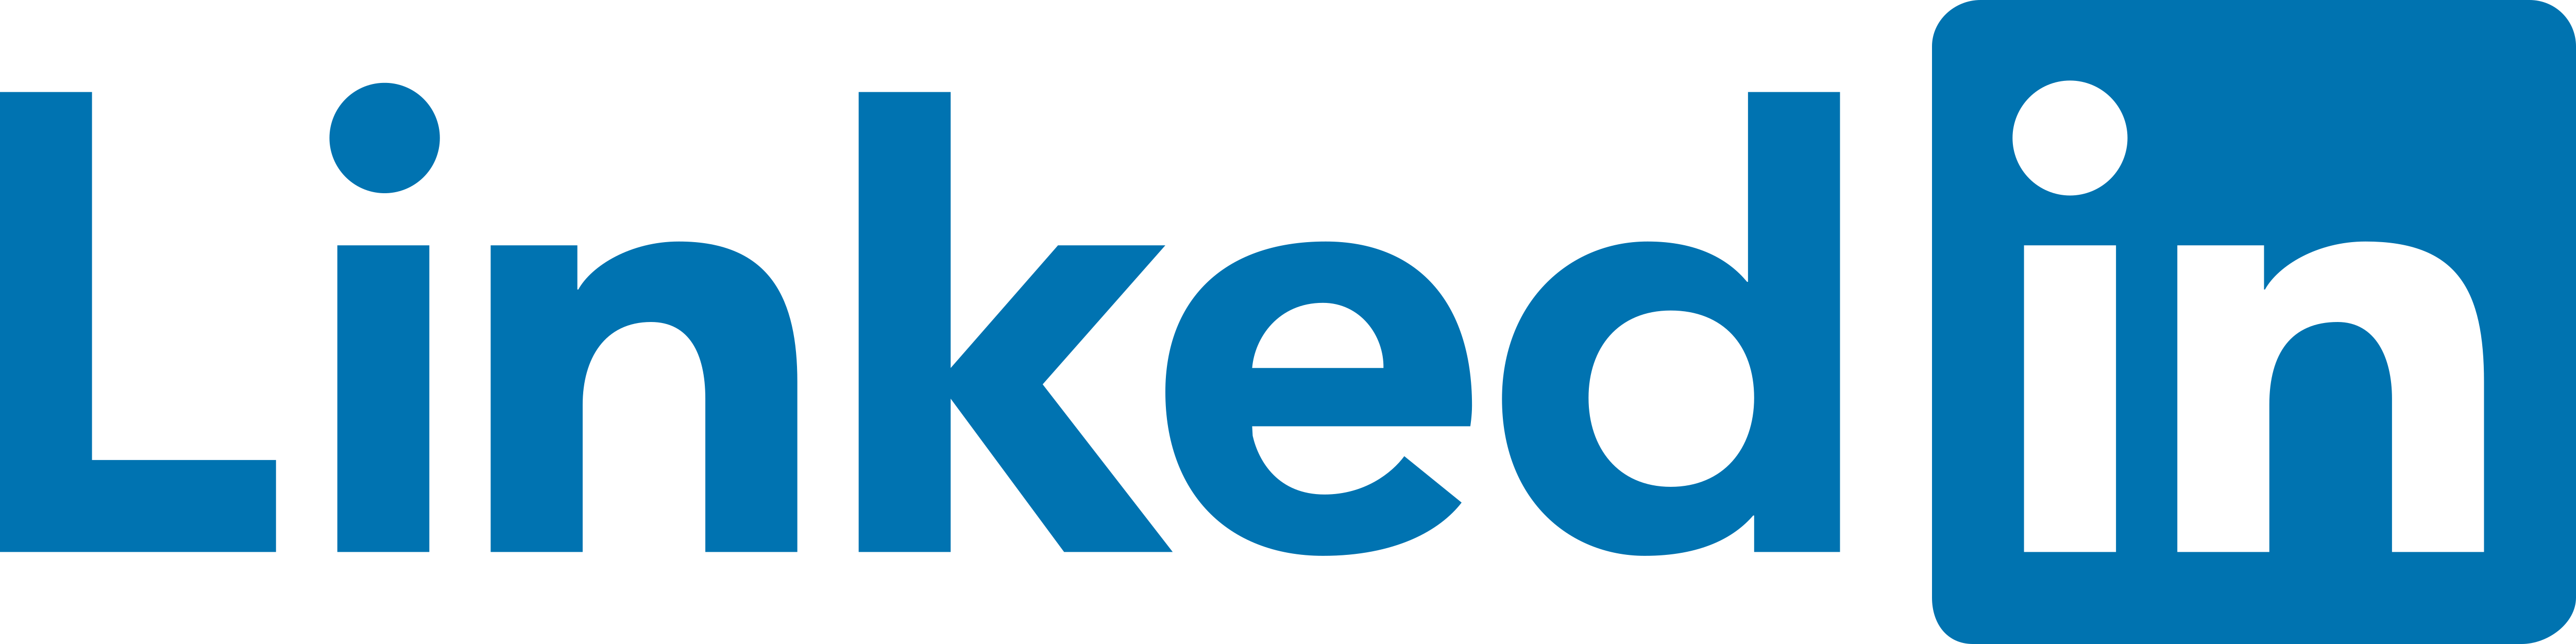 LinkedIn_Logo_